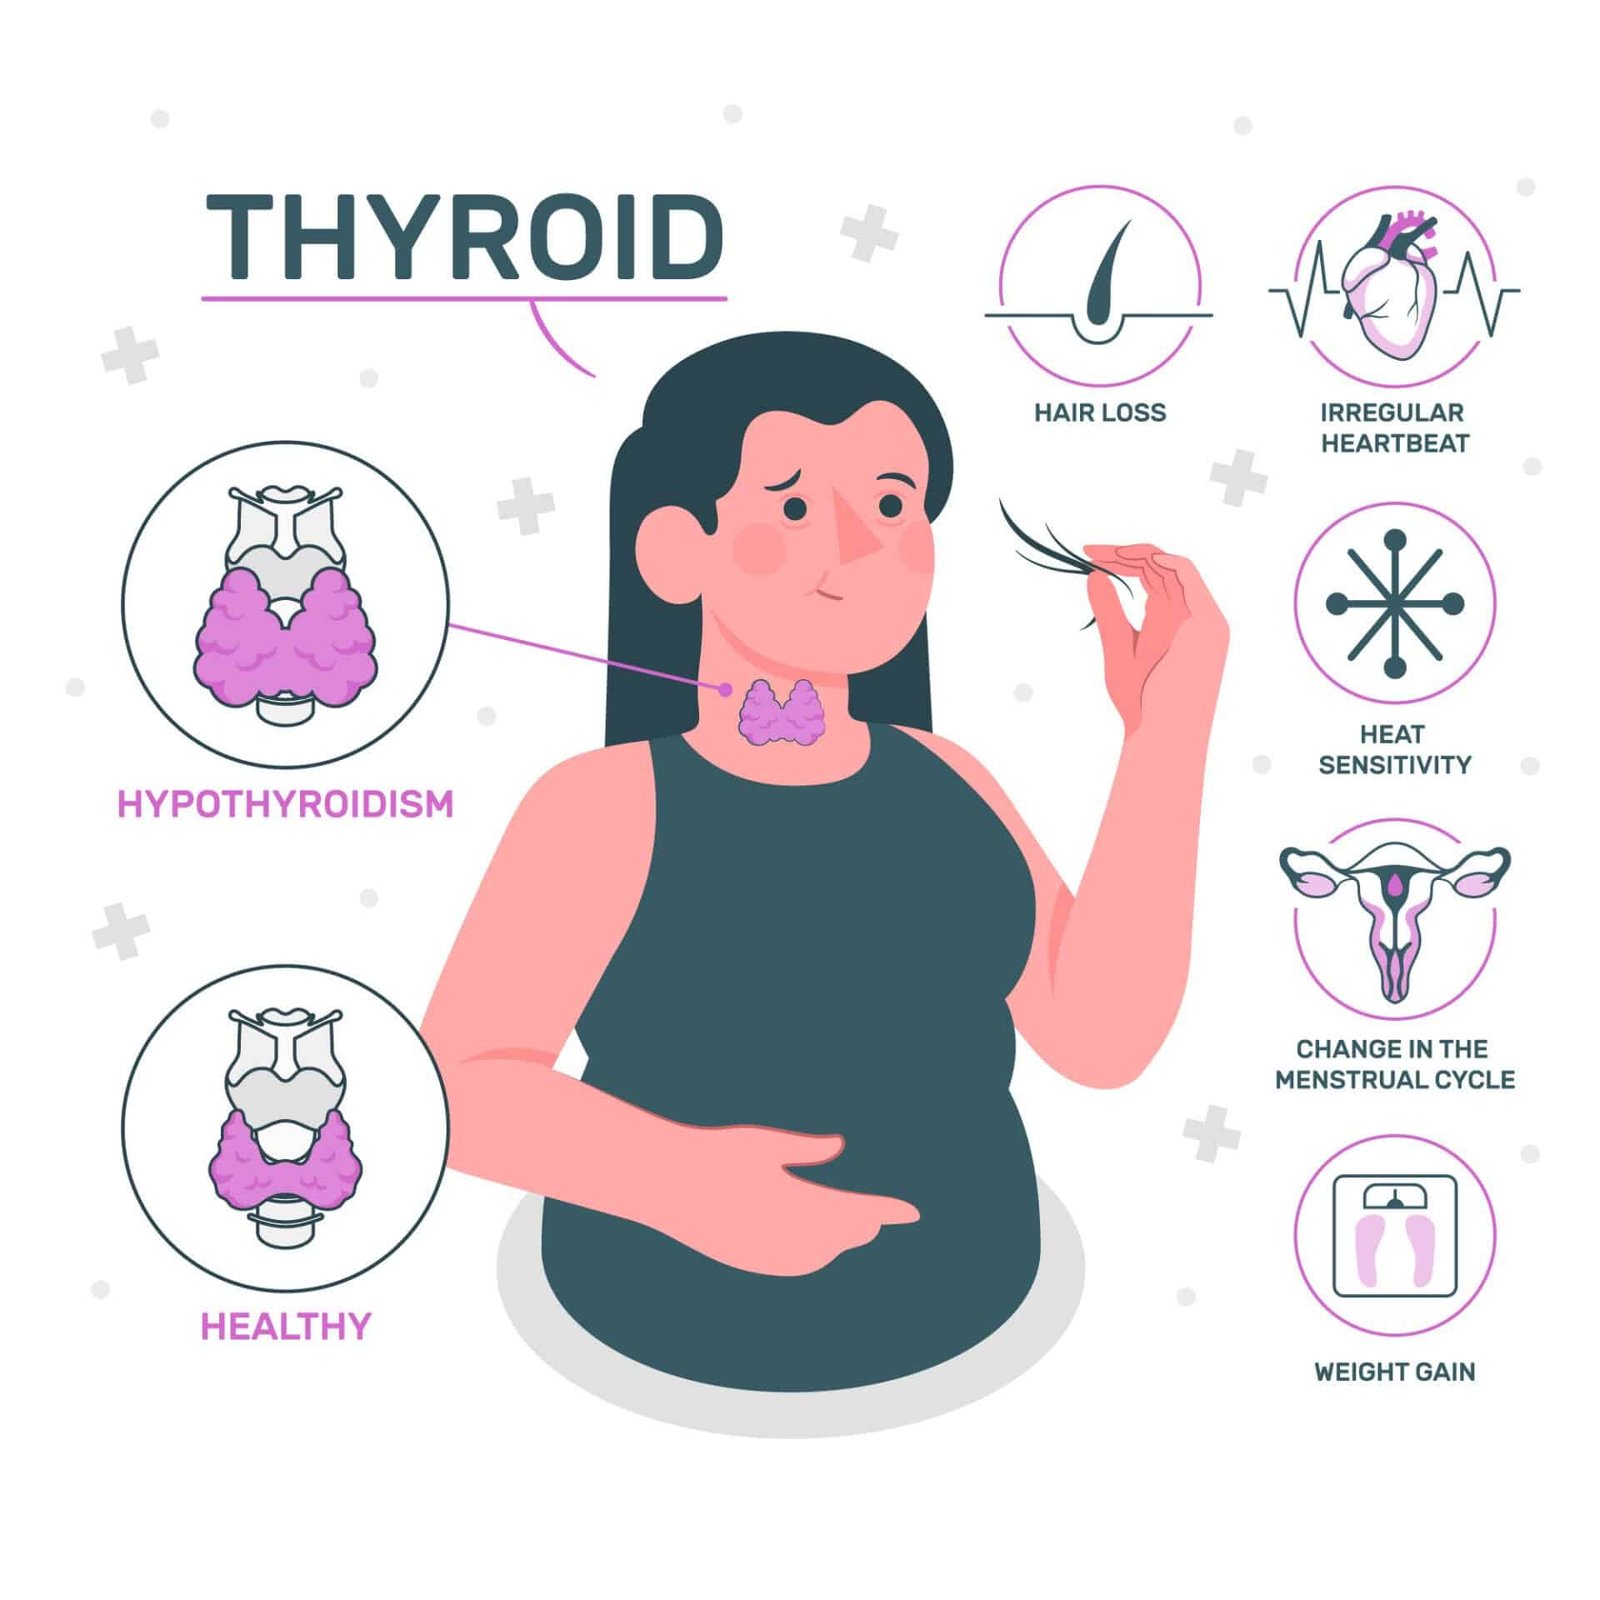 Thyroid Treatment on a Budget